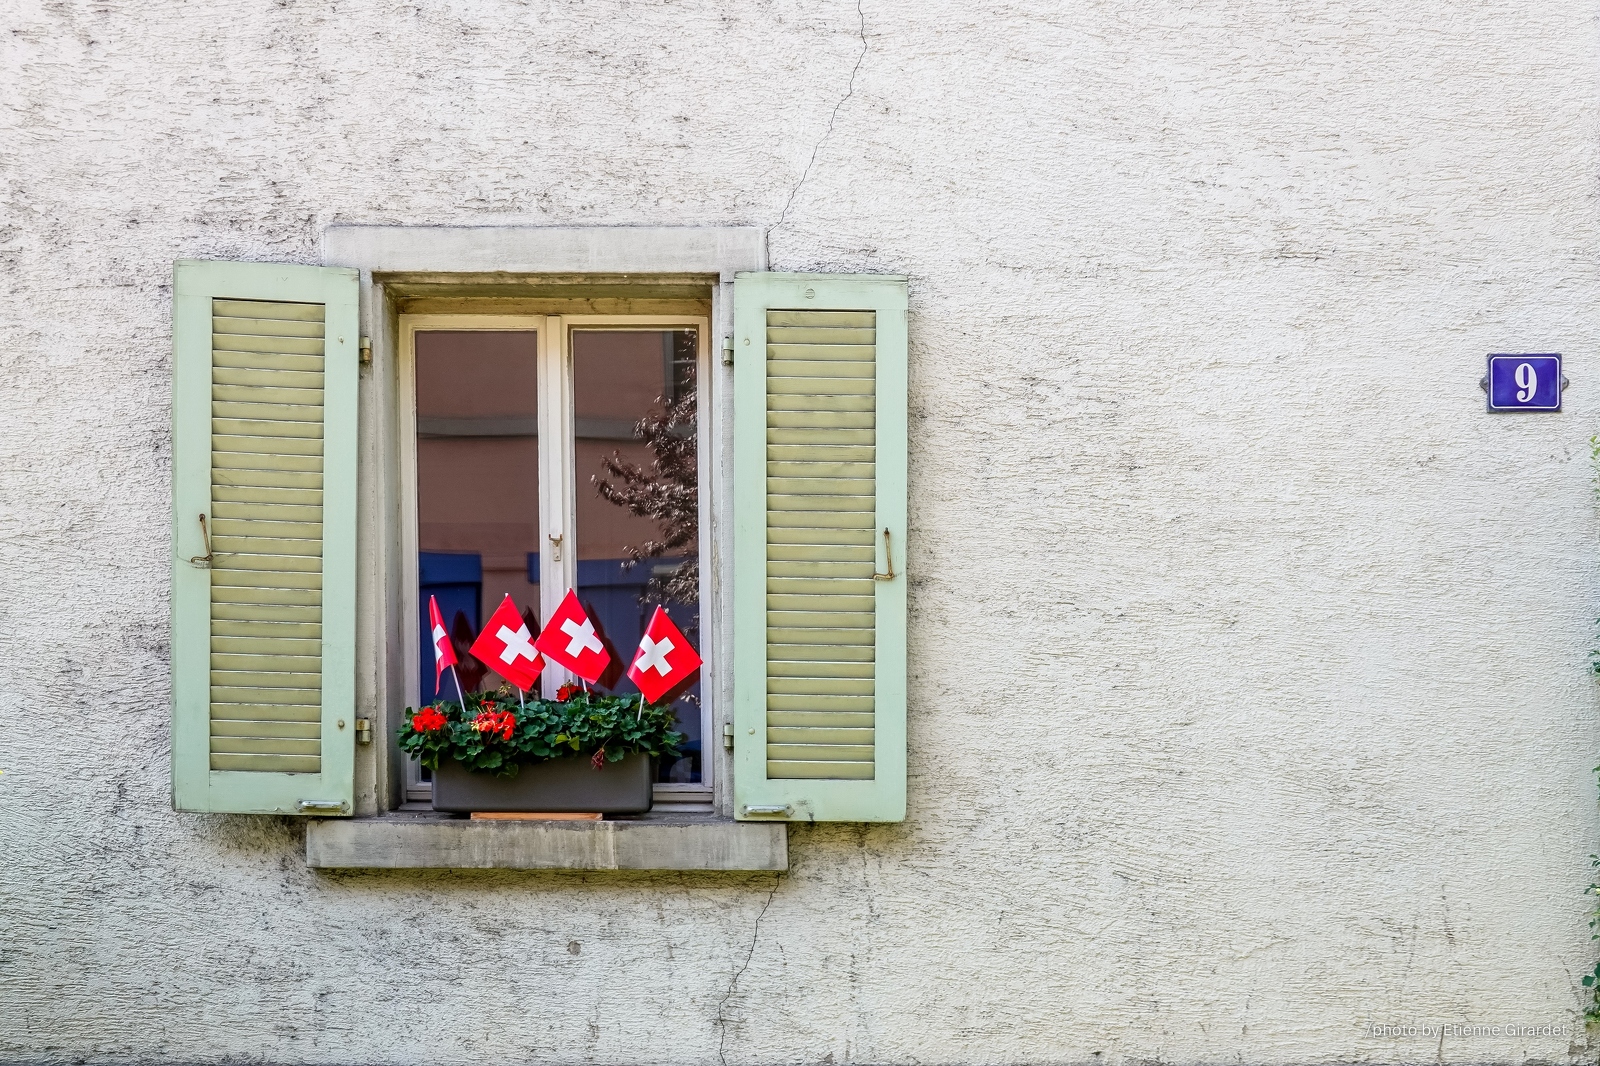 201808_01_RXX1005-window-house-swiss-flag-by-E-Girardet.jpg